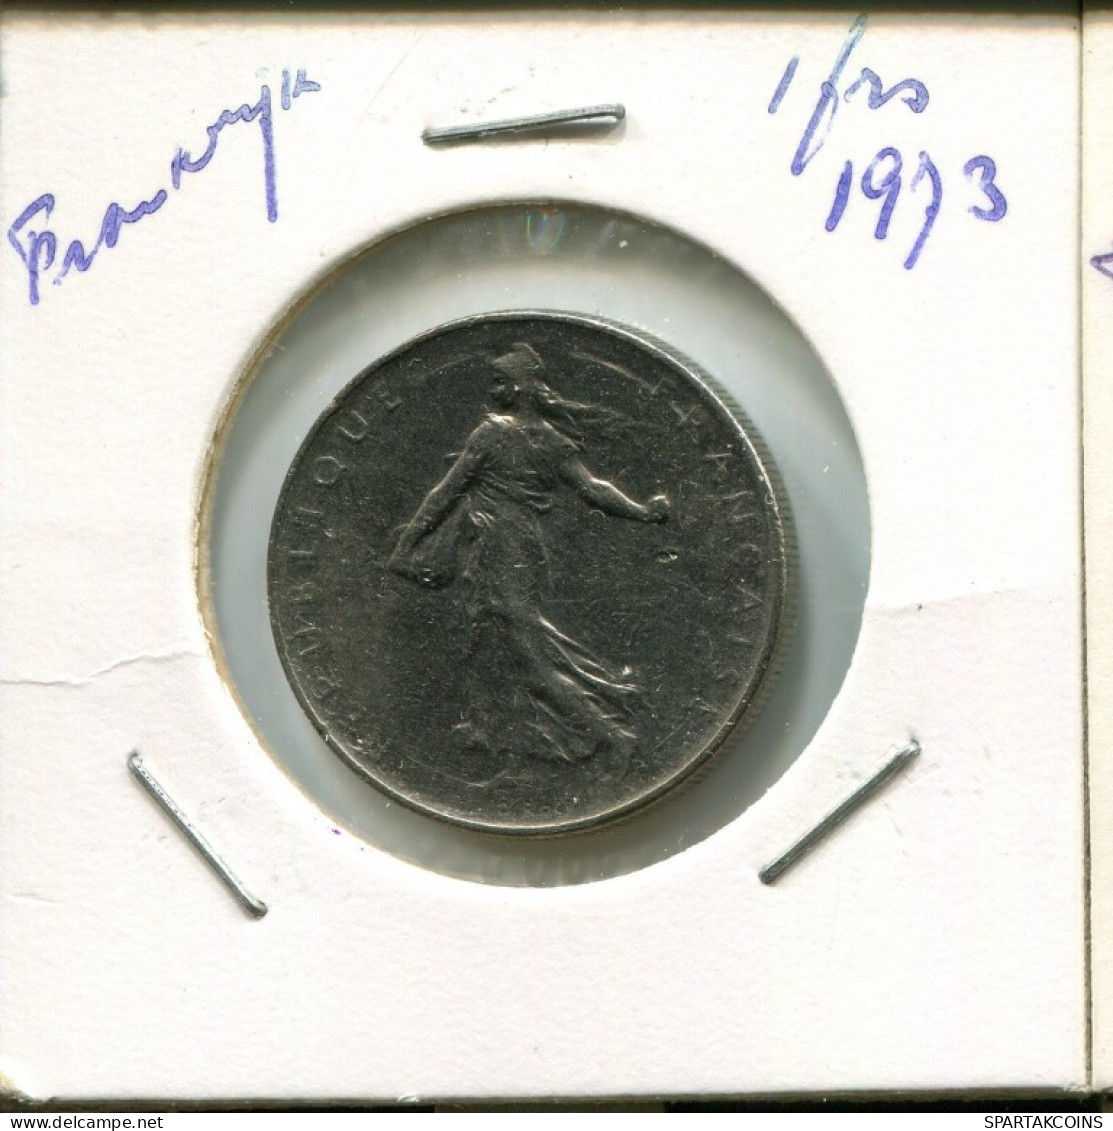 1 FRANC 1973 FRANCE Coin French Coin #AN966.U.A - 1 Franc